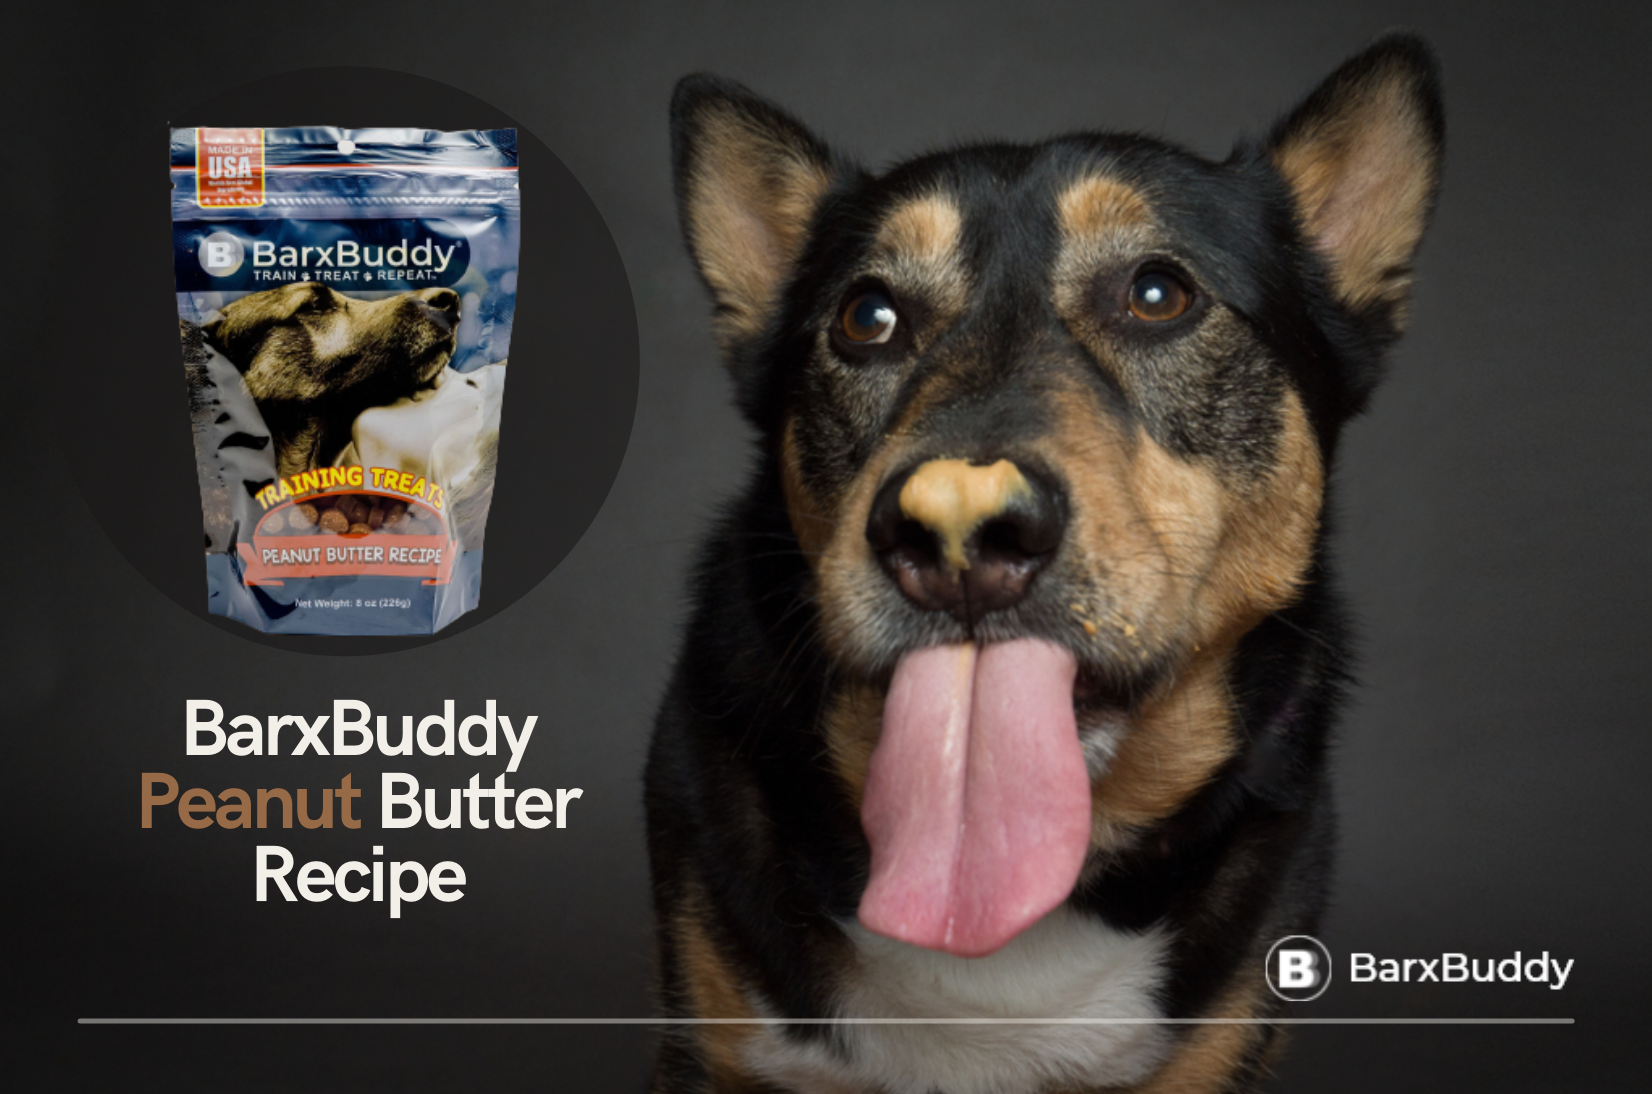 My Dog Absolutely Loves The BarxBuddy Peanut Butter Recipe